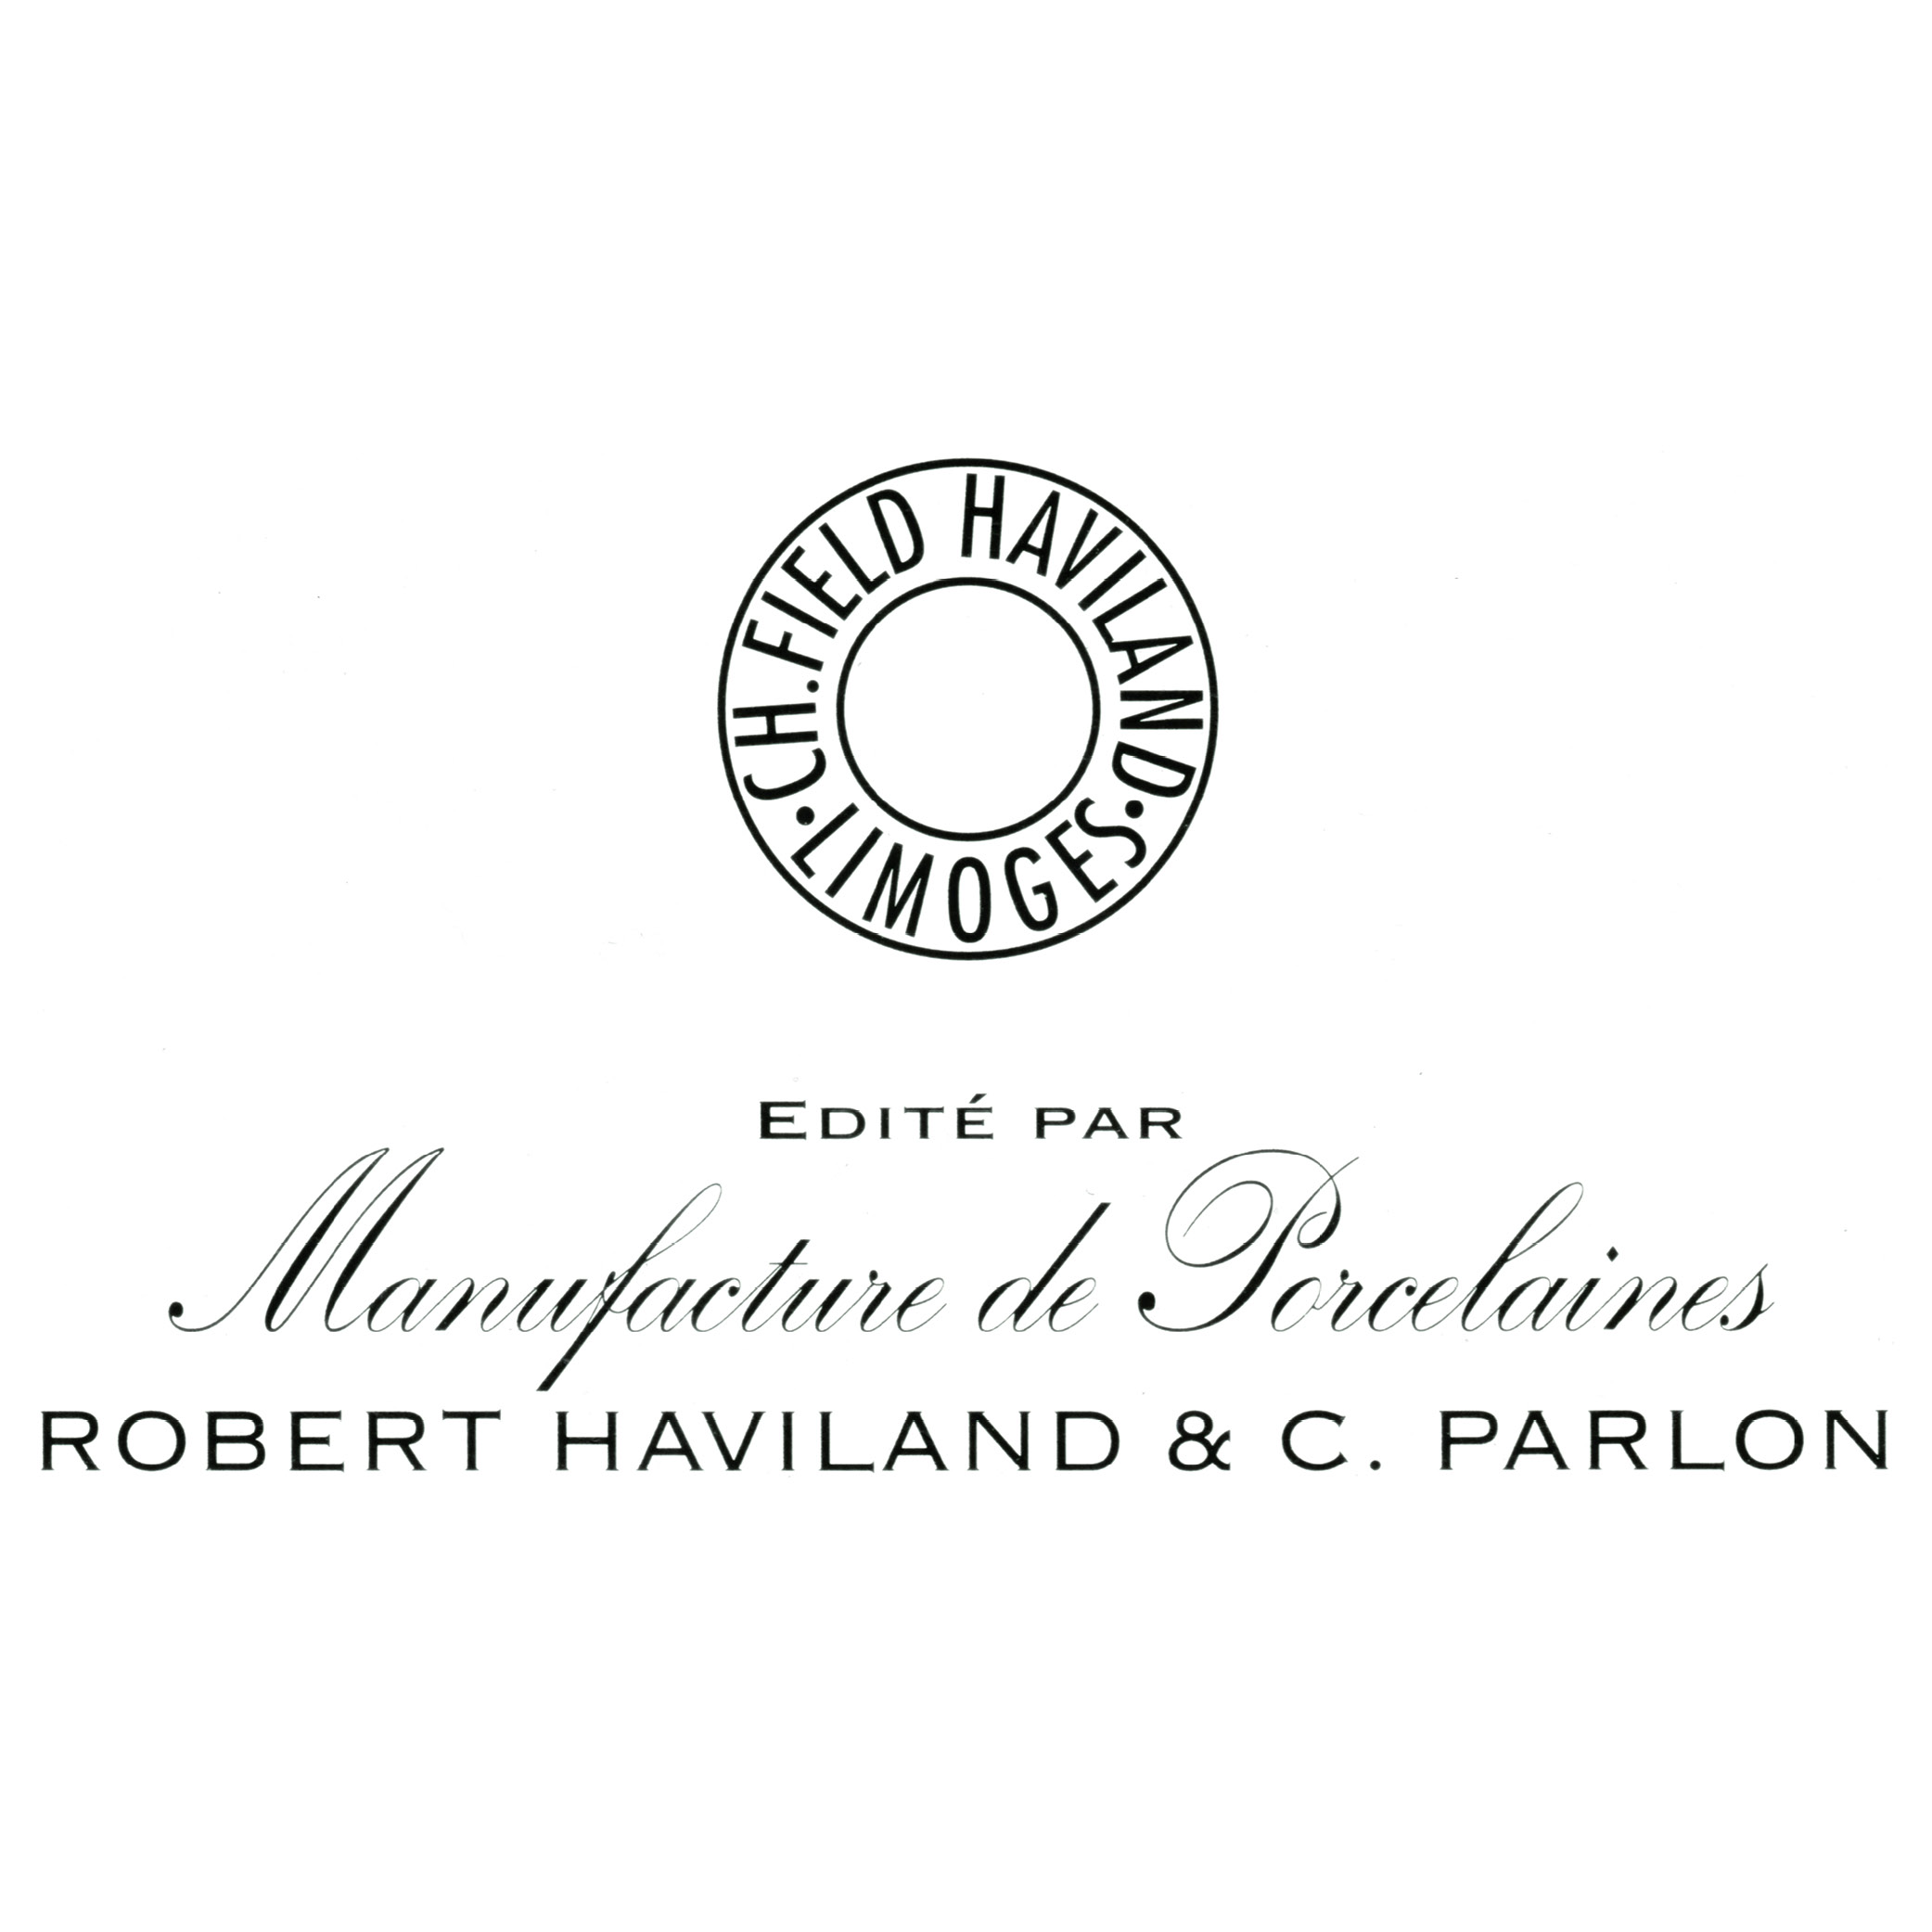 R. HAVILAND & C. PARLON